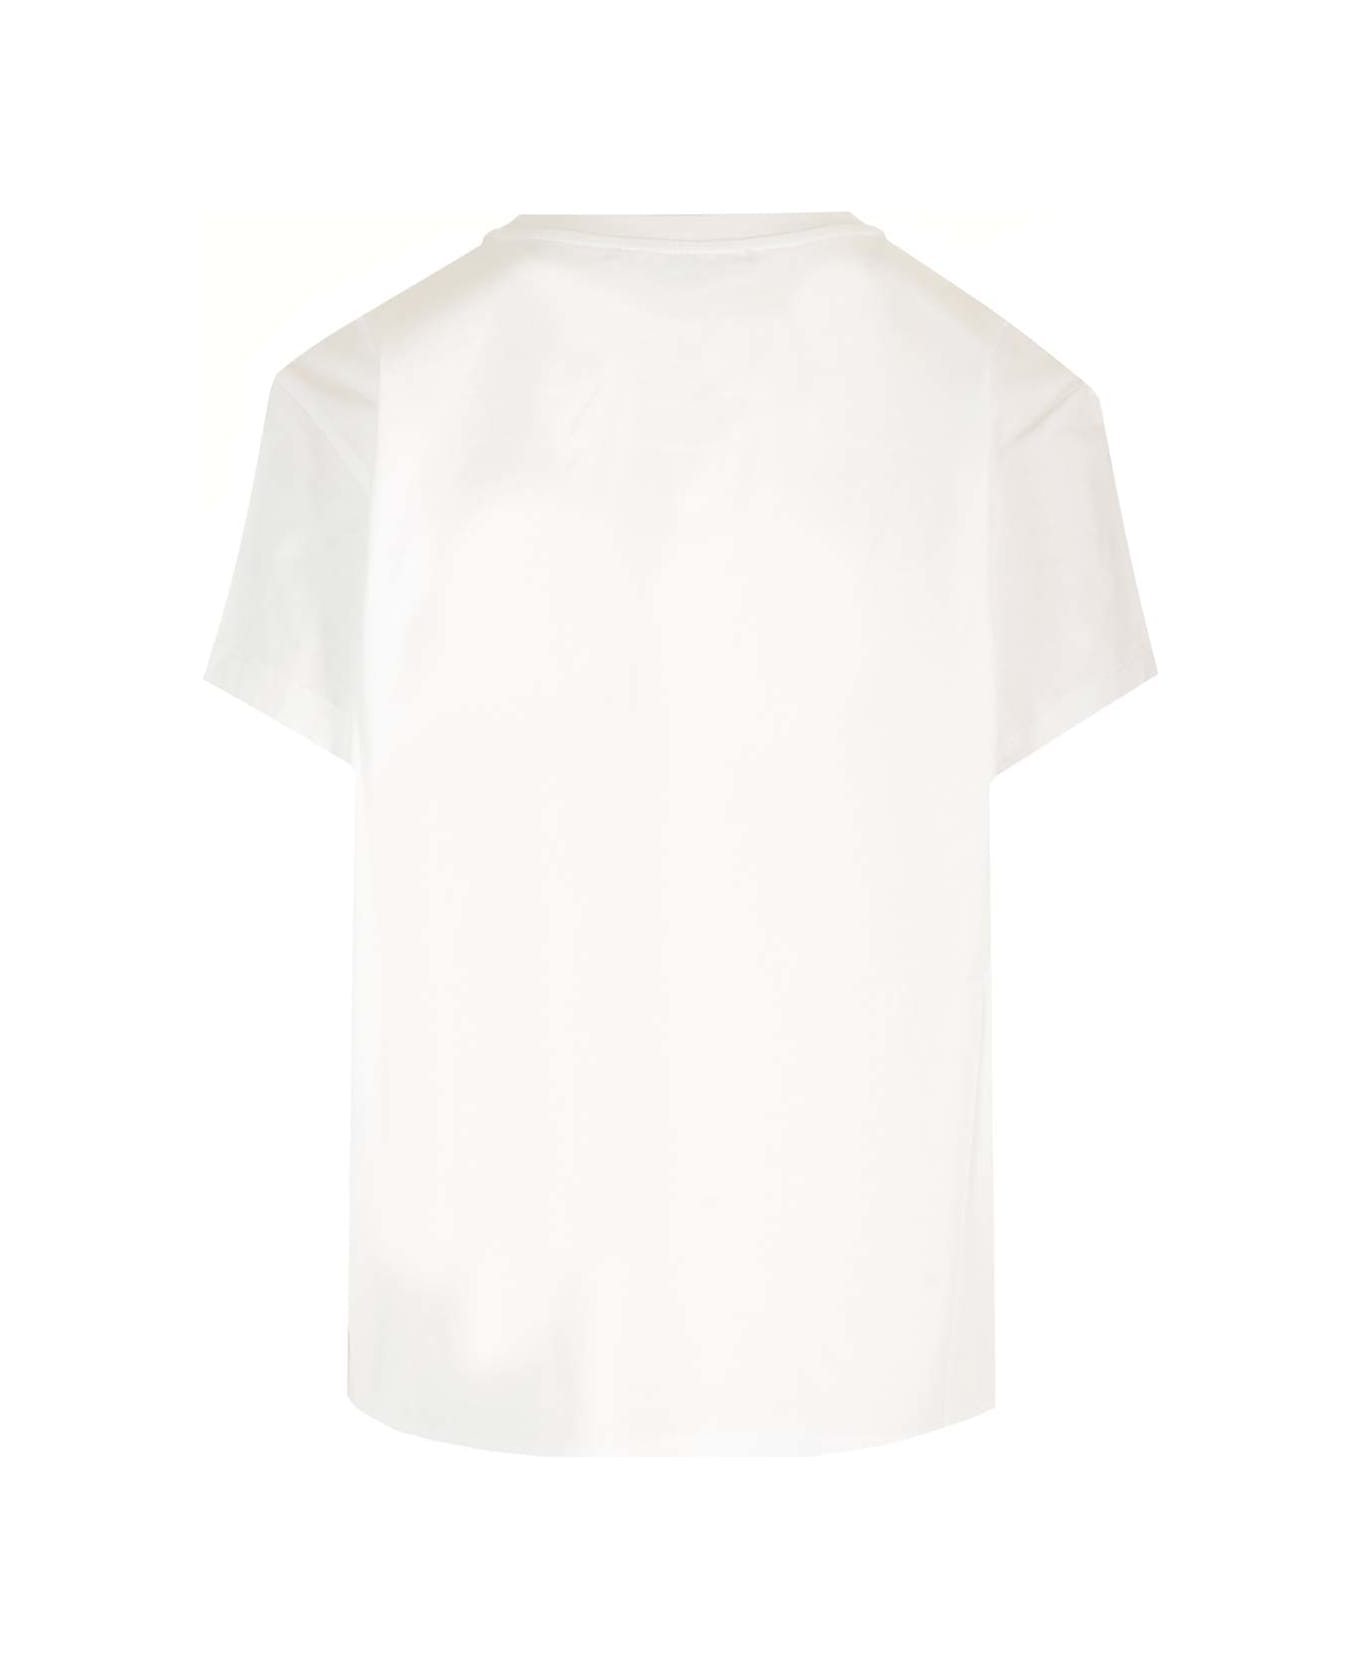 Stella McCartney Signature T-shirt - WHITE